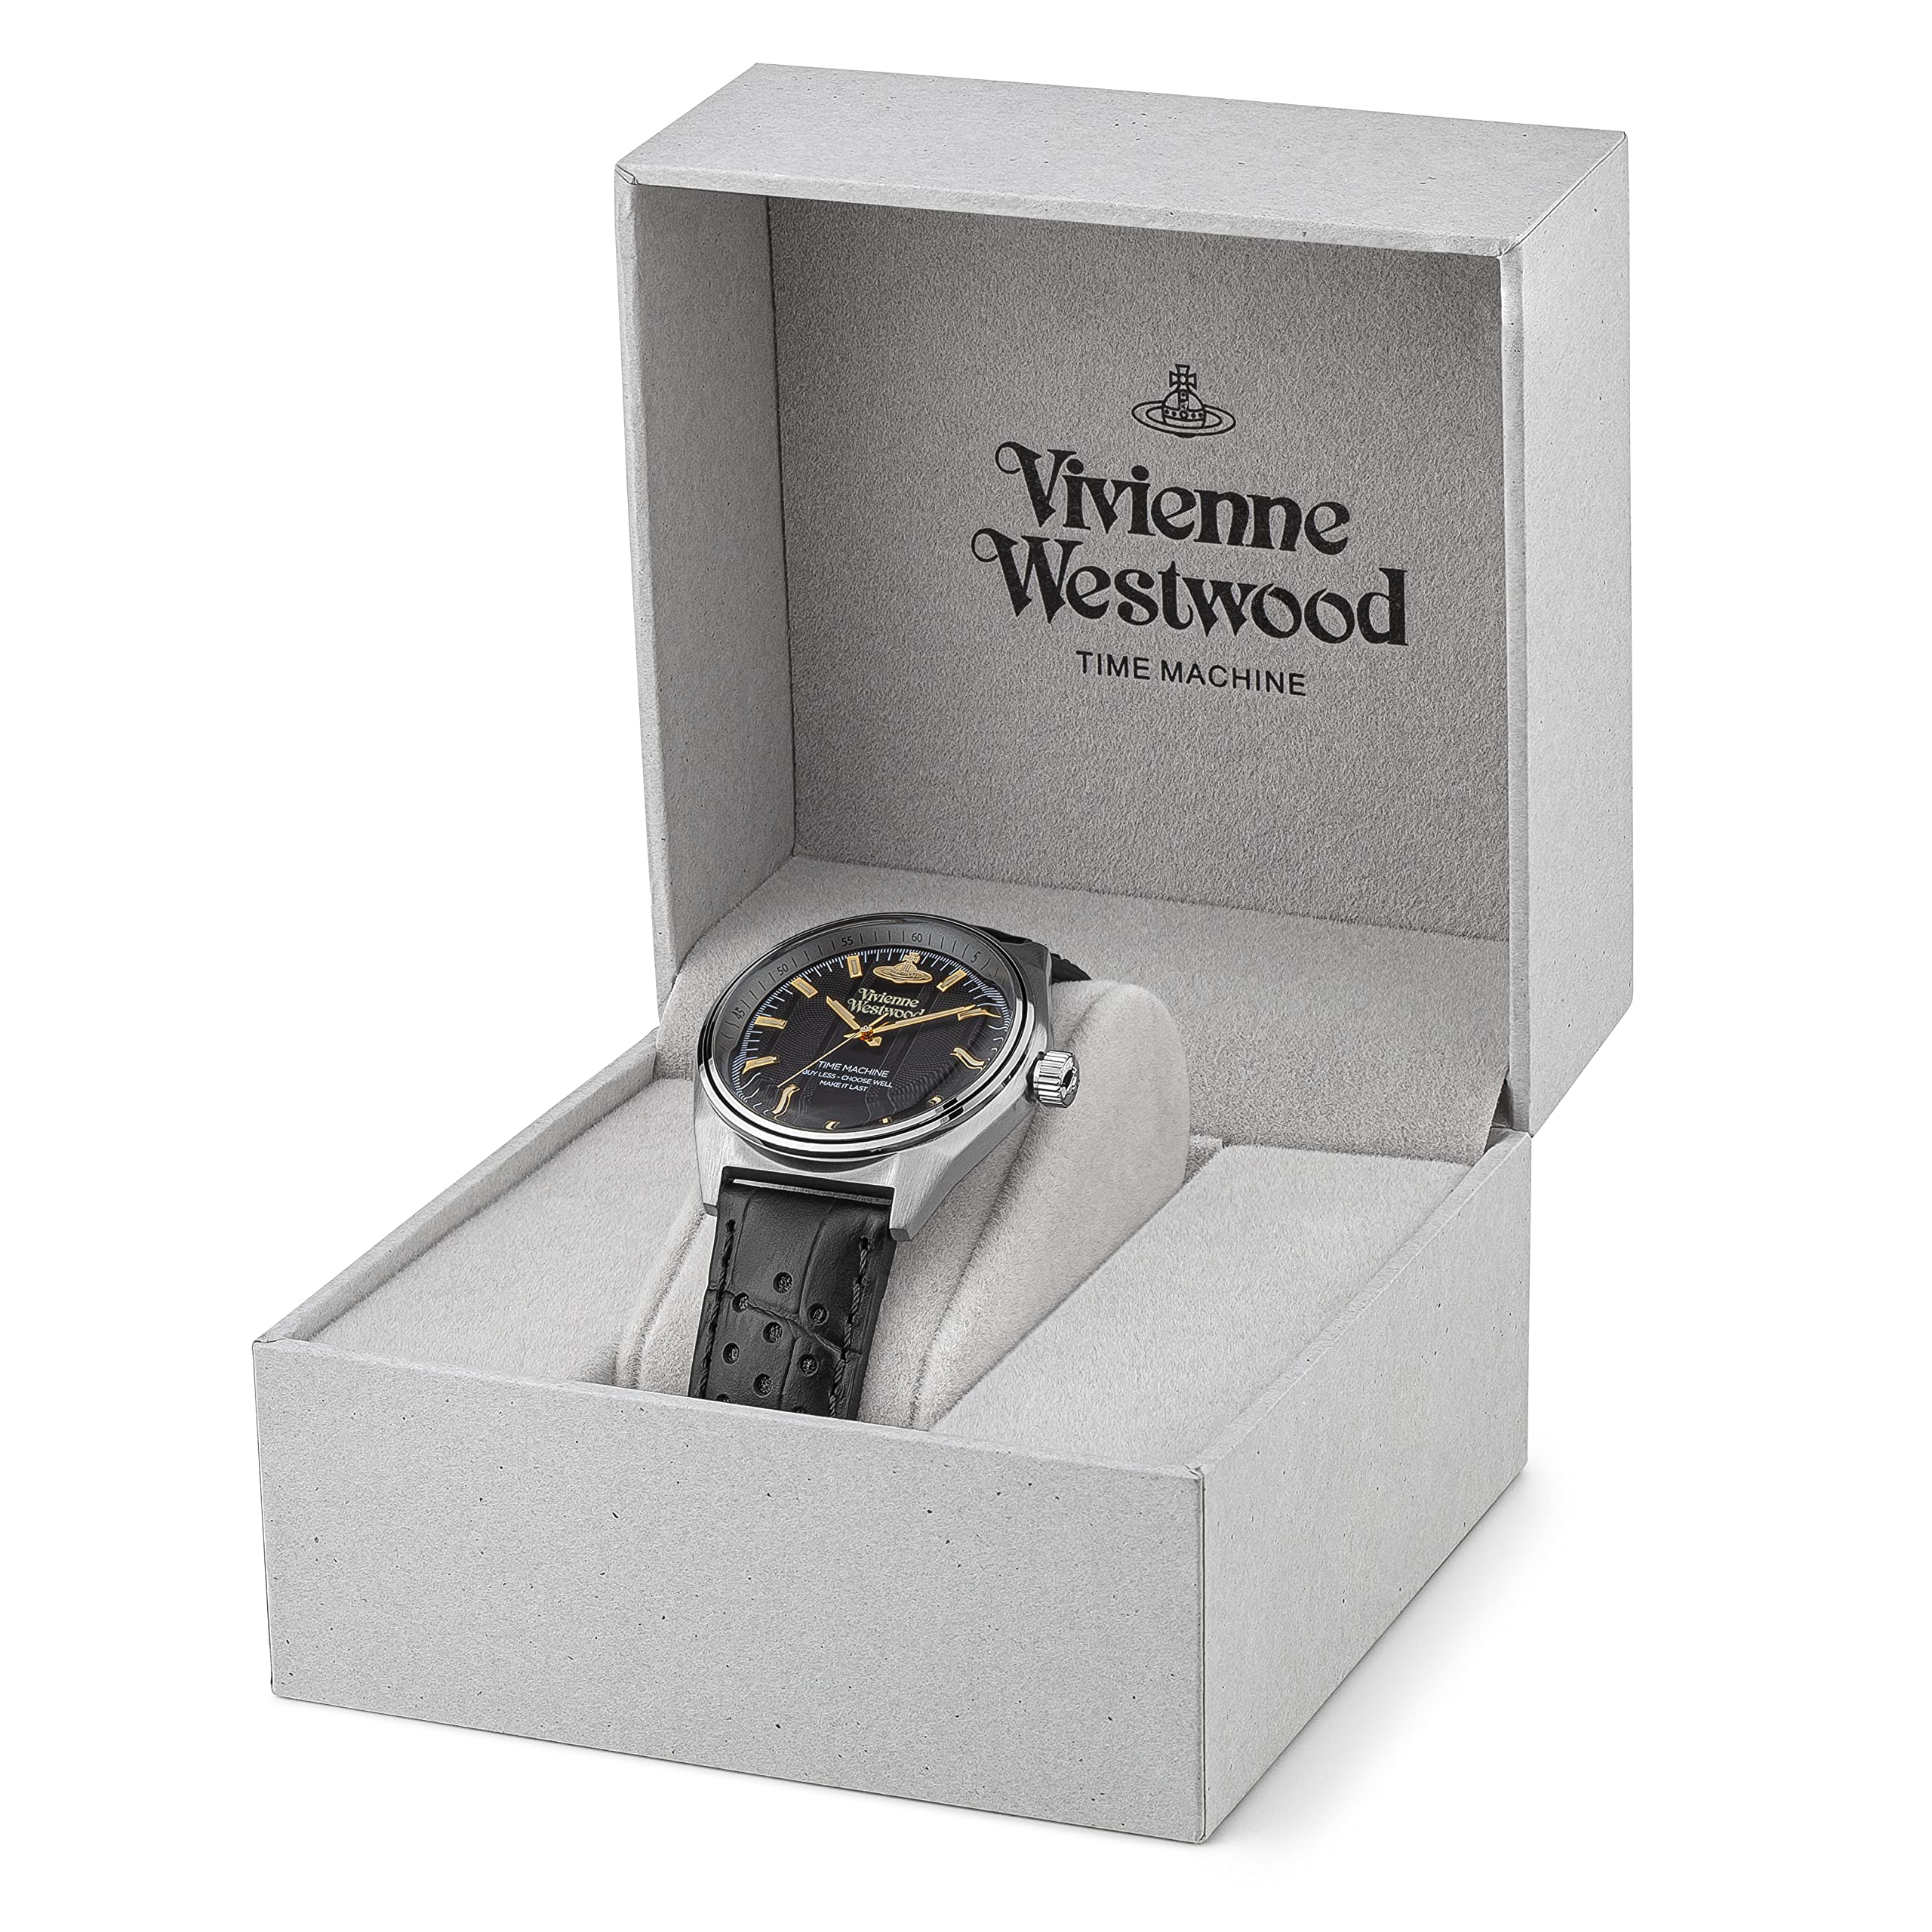 Vivienne Westwood Sydenham Mens Quartz Watch with Black Dial & Leather Strap or Silver Stainless Steel Bracelet